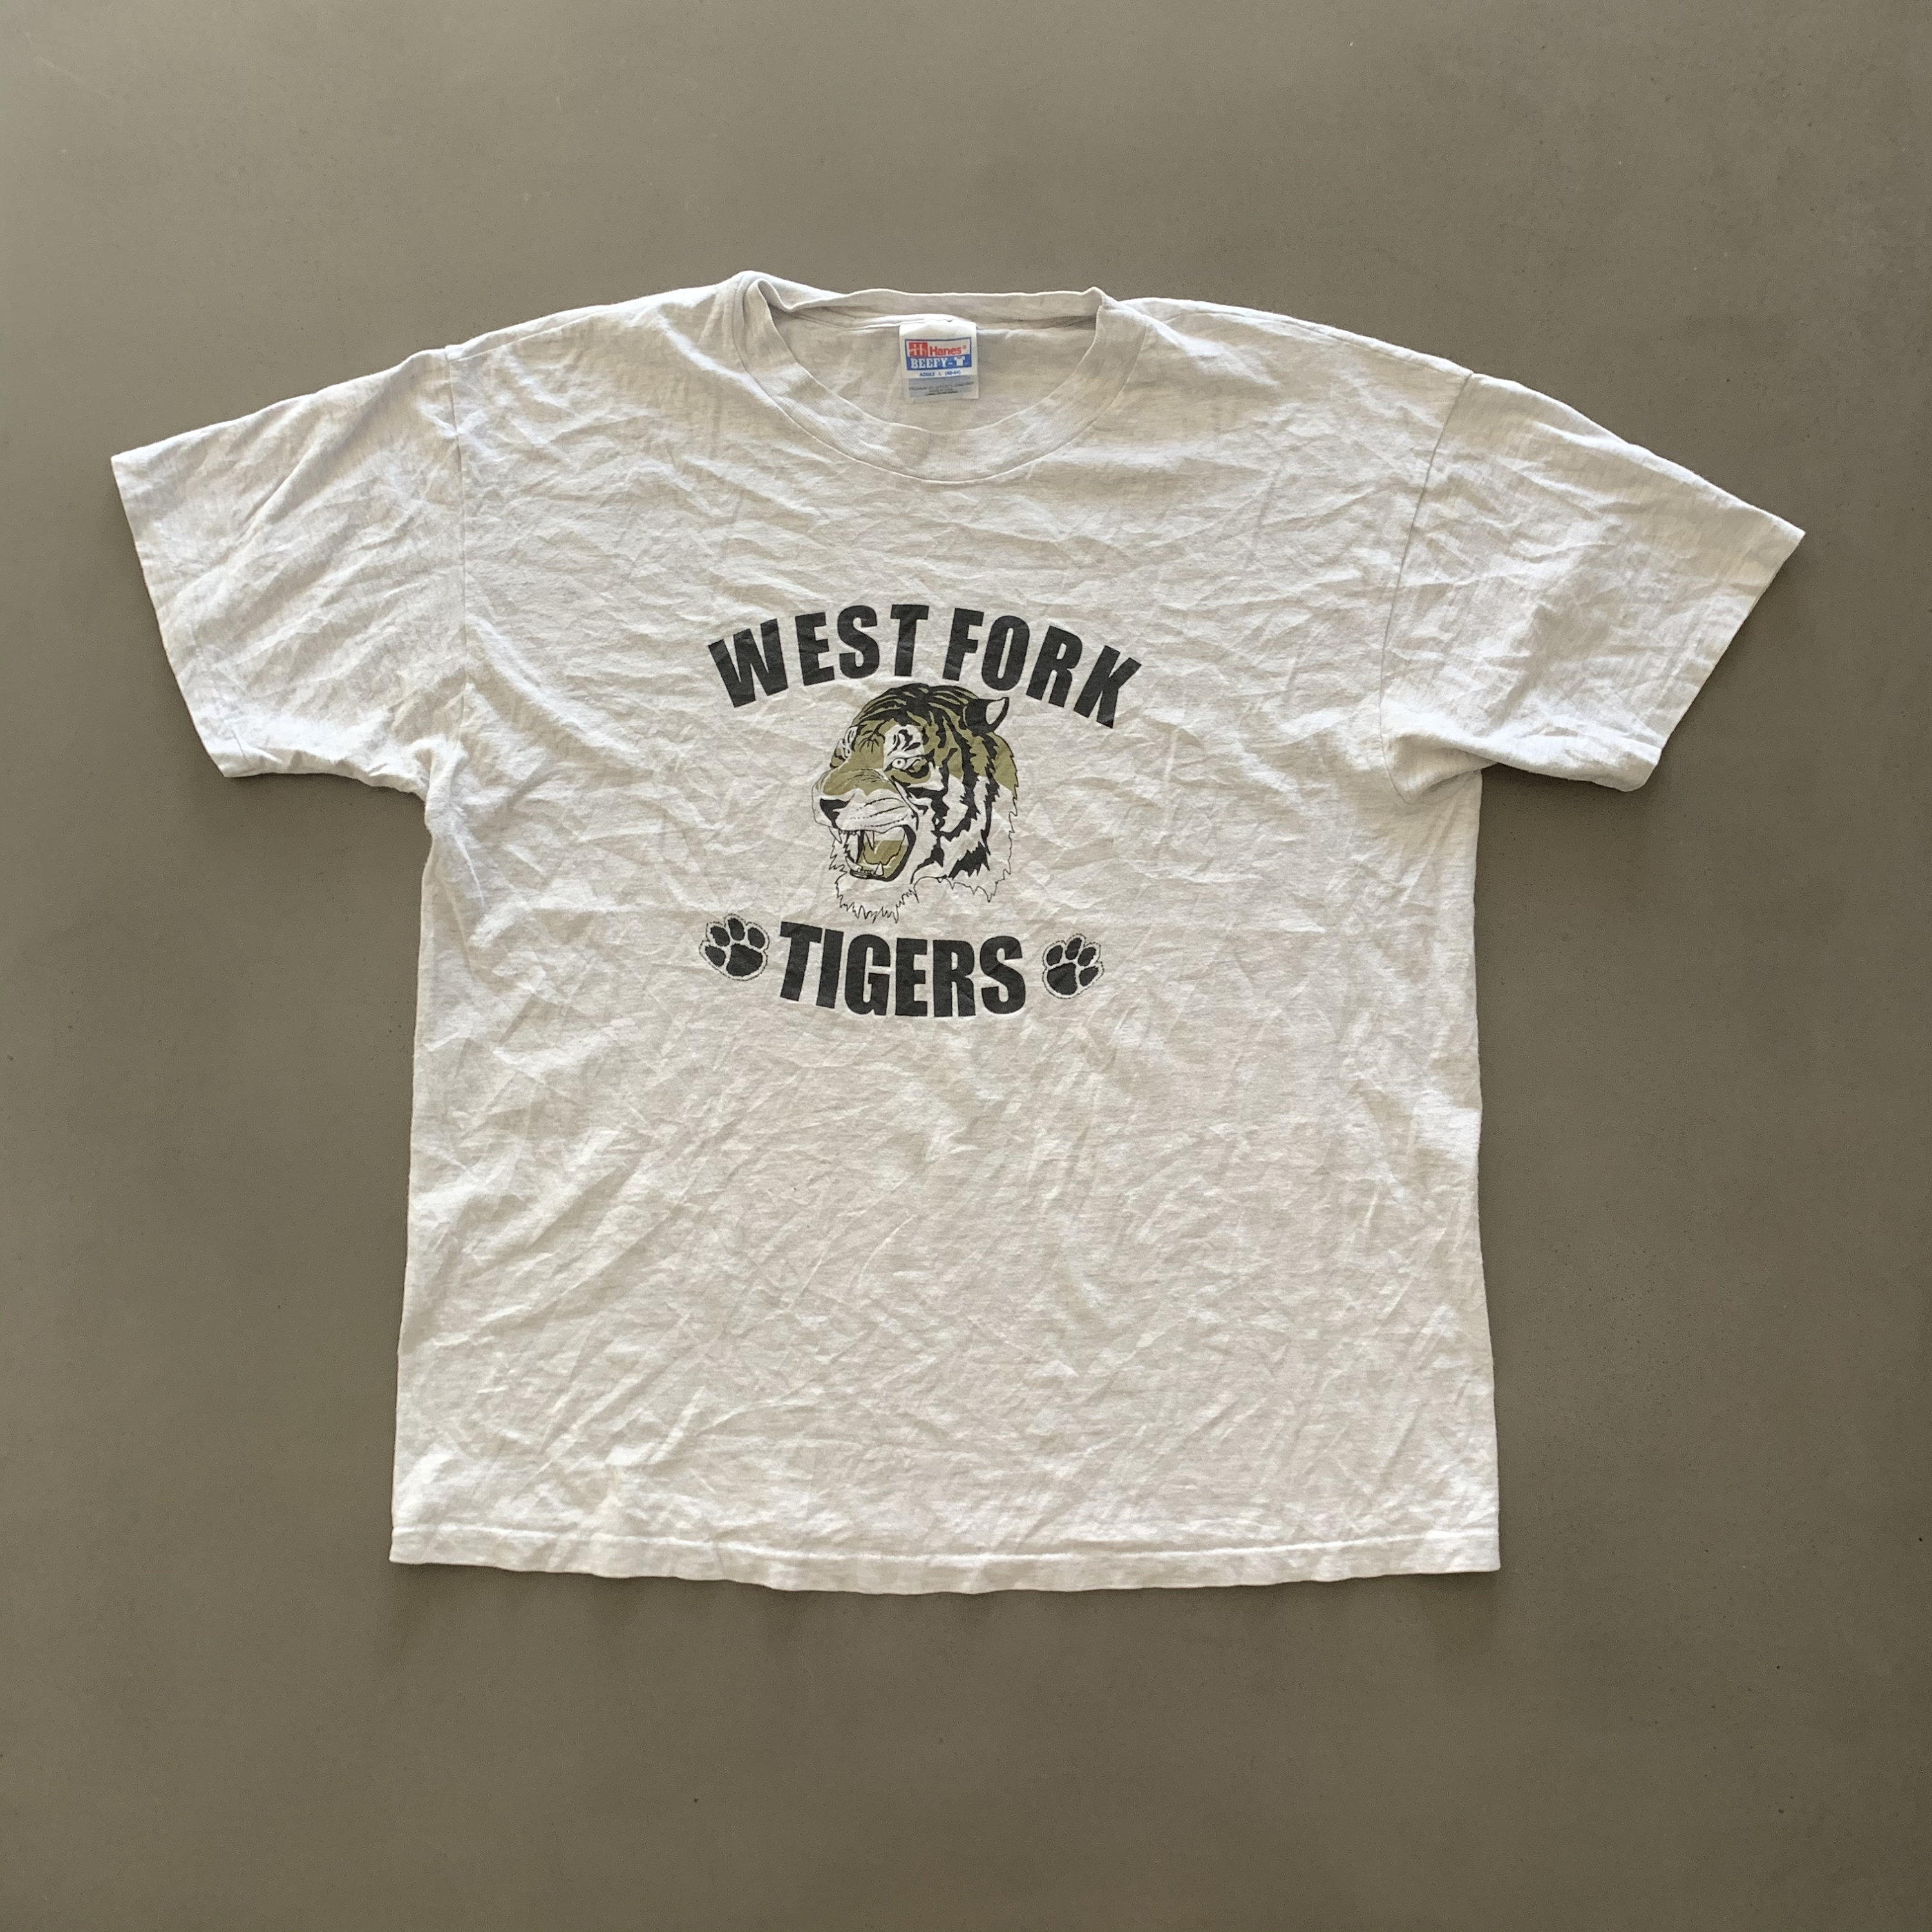 Vintage 1990s High School T-shirt size Large | Etsy